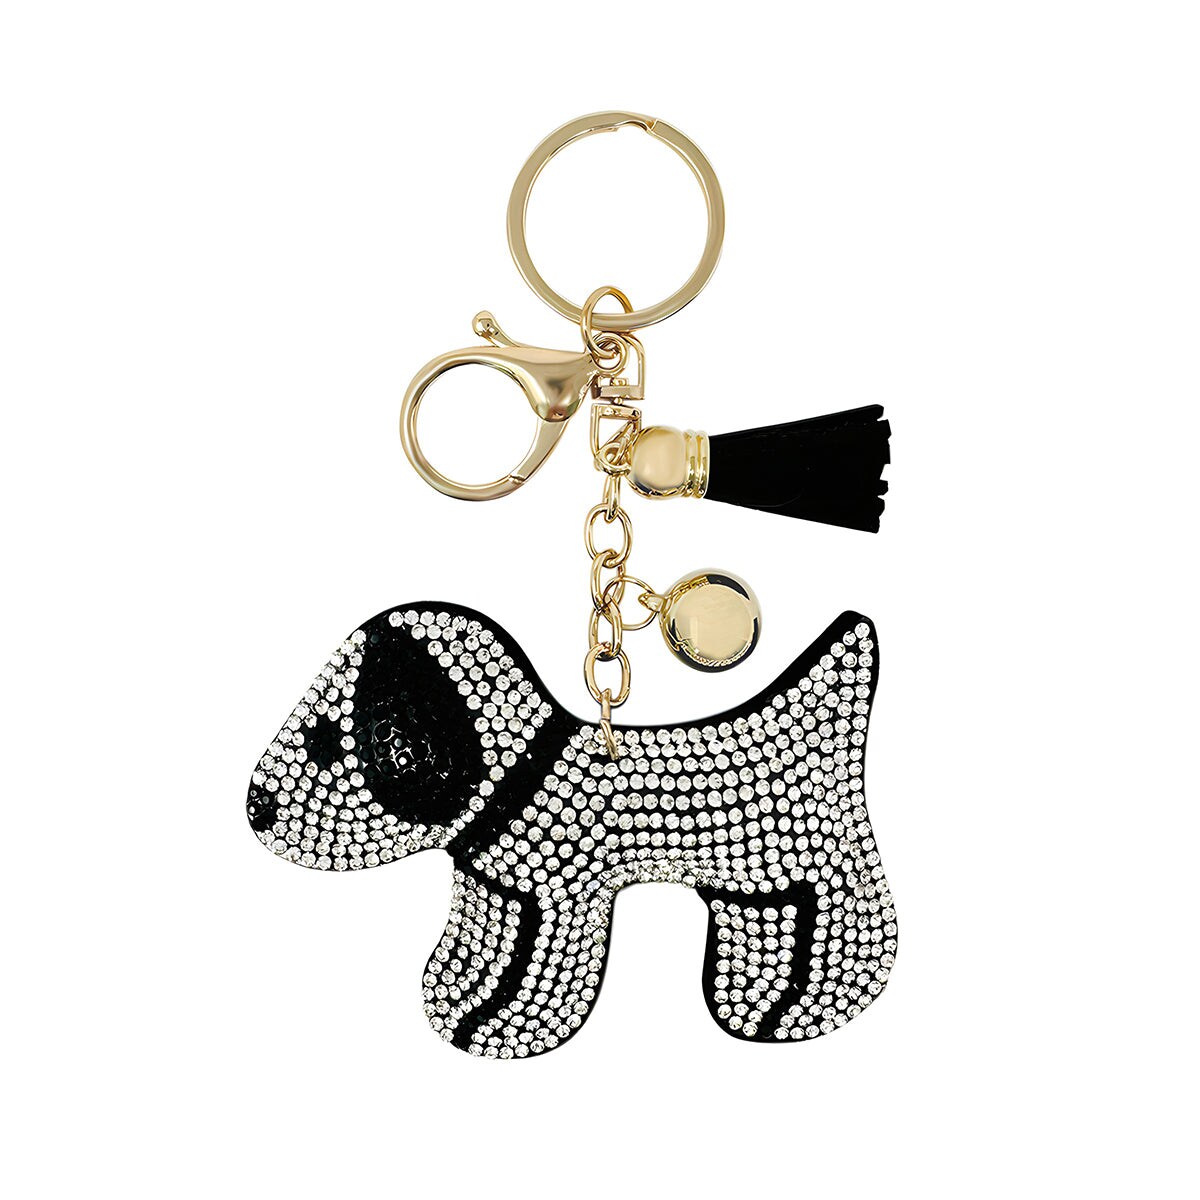 Wrapables Crystal Bling Key Chain Keyring with Tassel Car Purse Handbag Pendant, Puppy